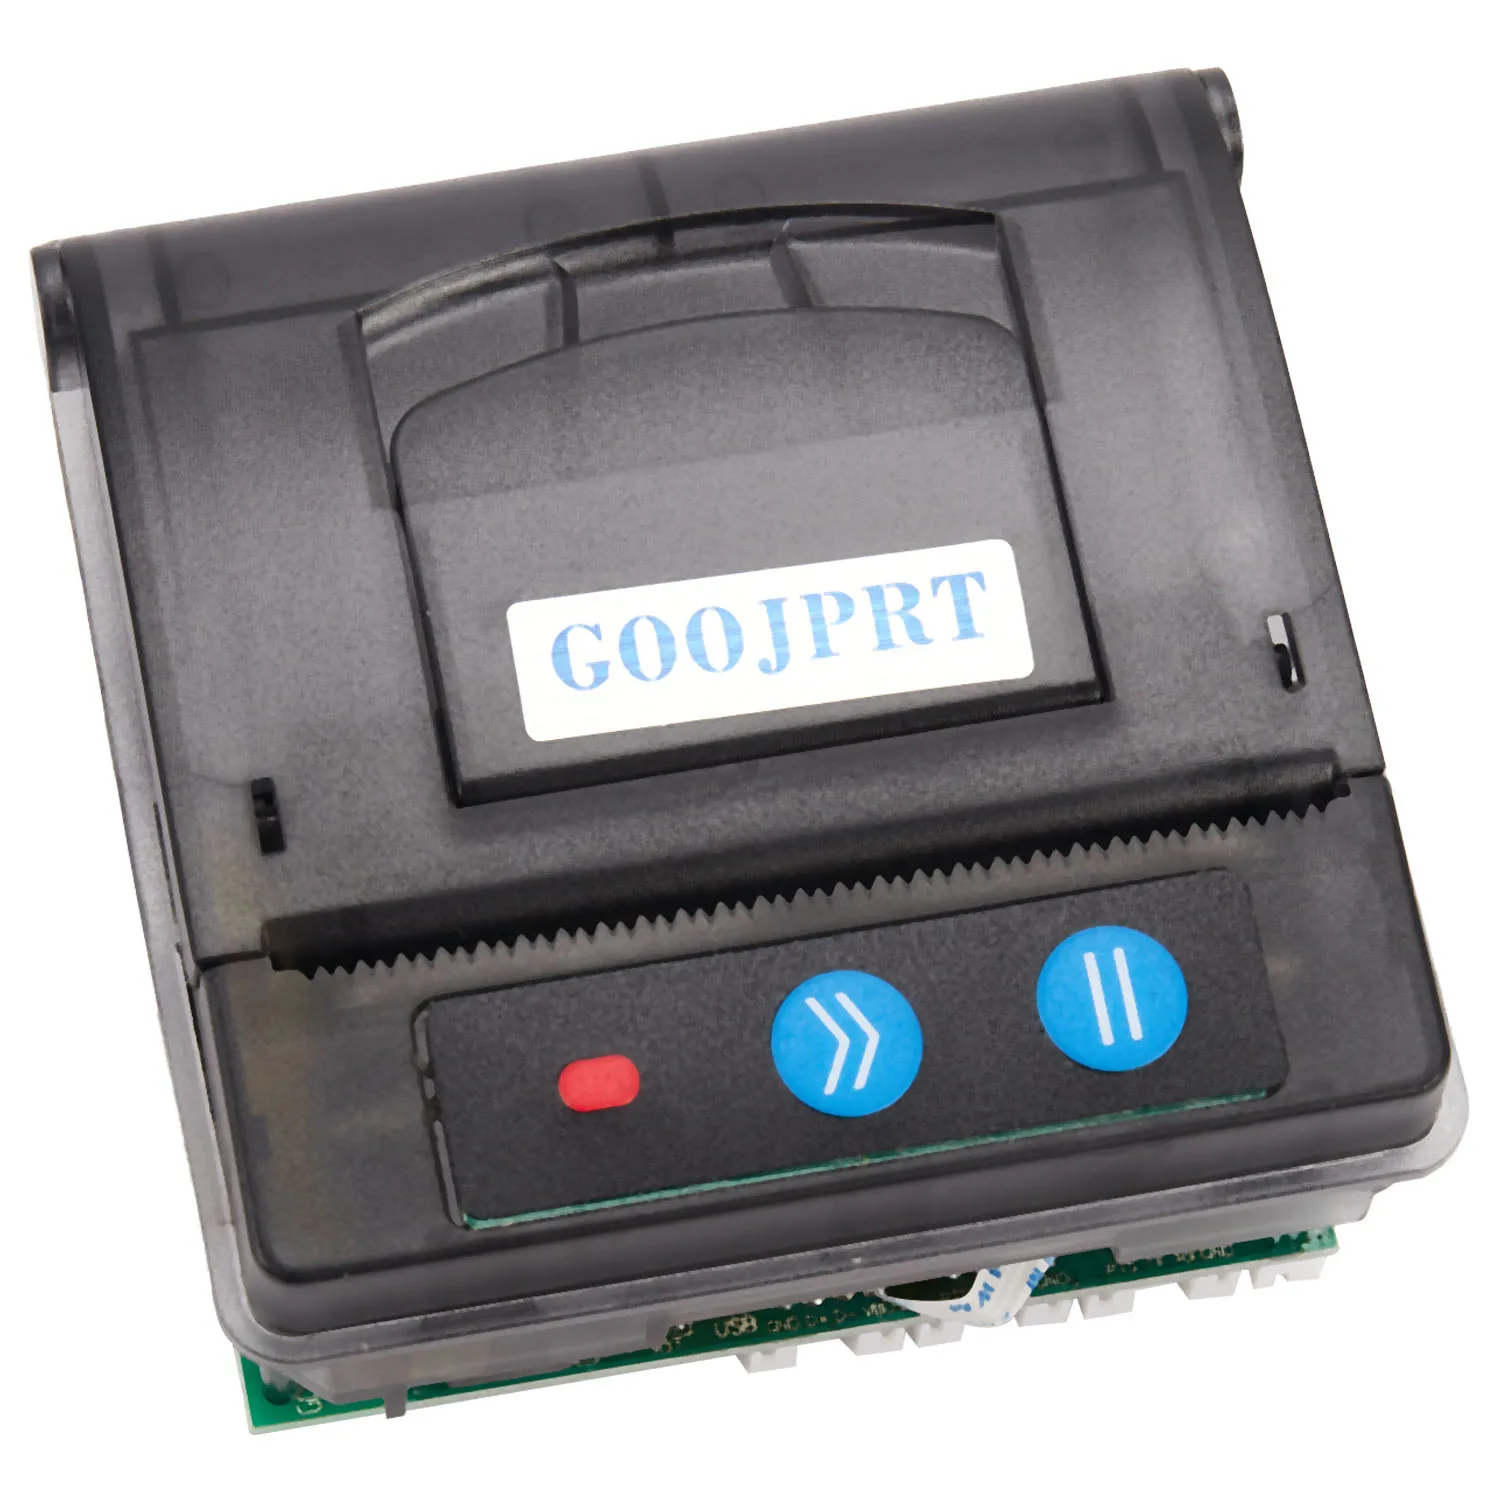 

Goojprt Qr203 58Mm Micro-Mini Embedded Thermal Printer Rs232+Ttl Panel Compatible Eml203 for Receipt Ticket Barcode